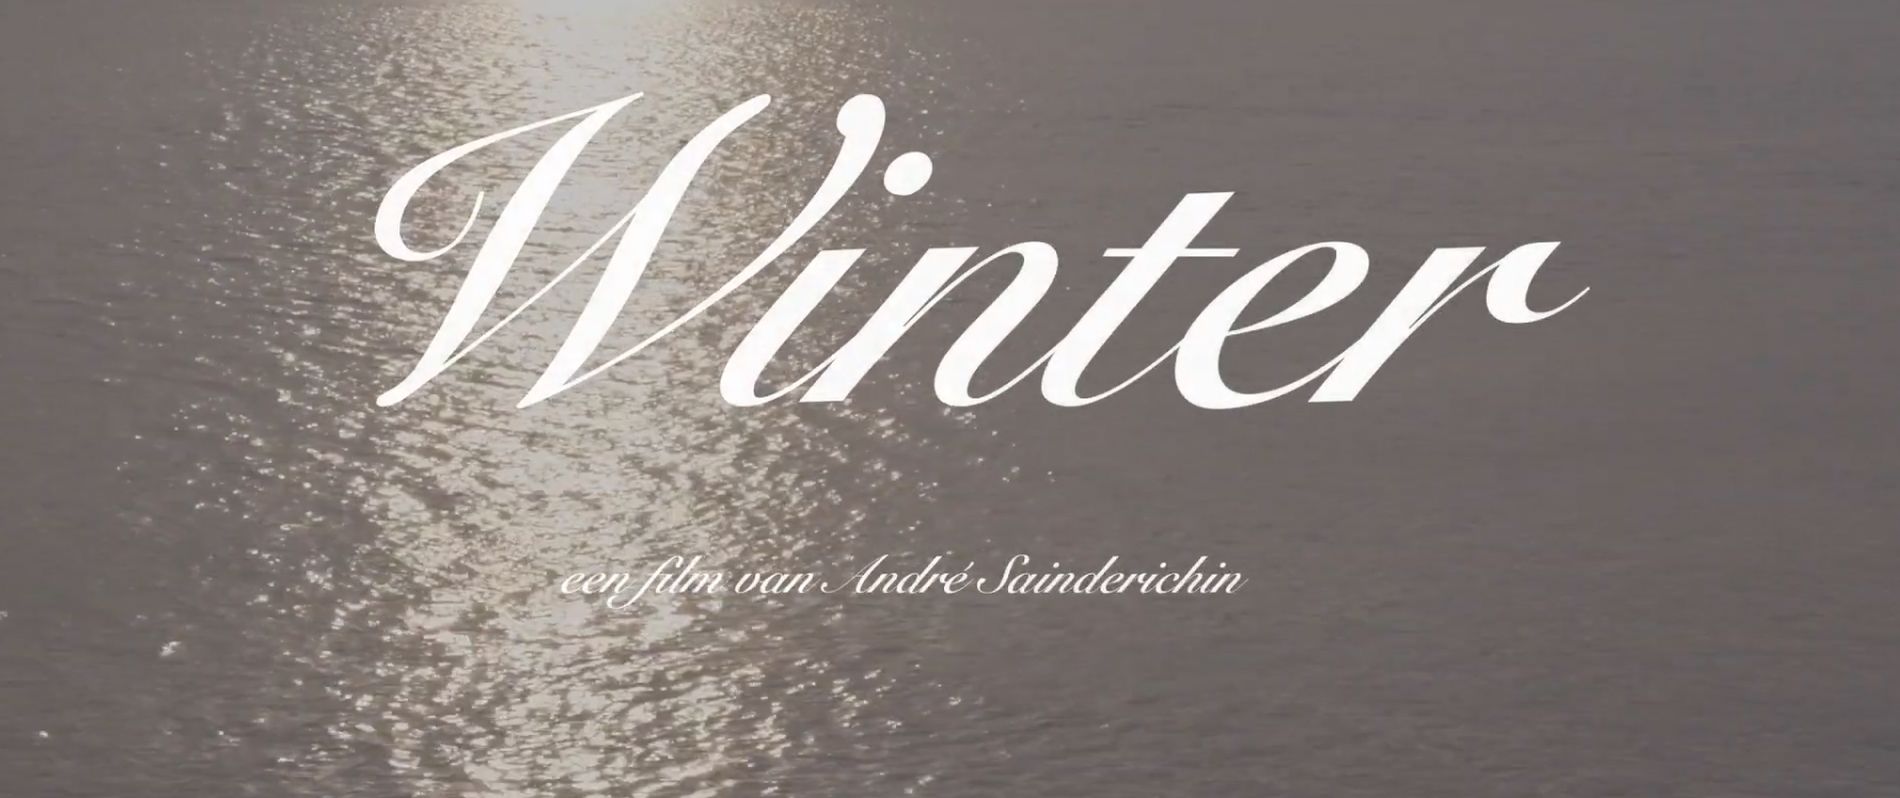 images/films/Winter.jpg#joomlaImage://local-images/films/Winter.jpg?width=1900&height=798